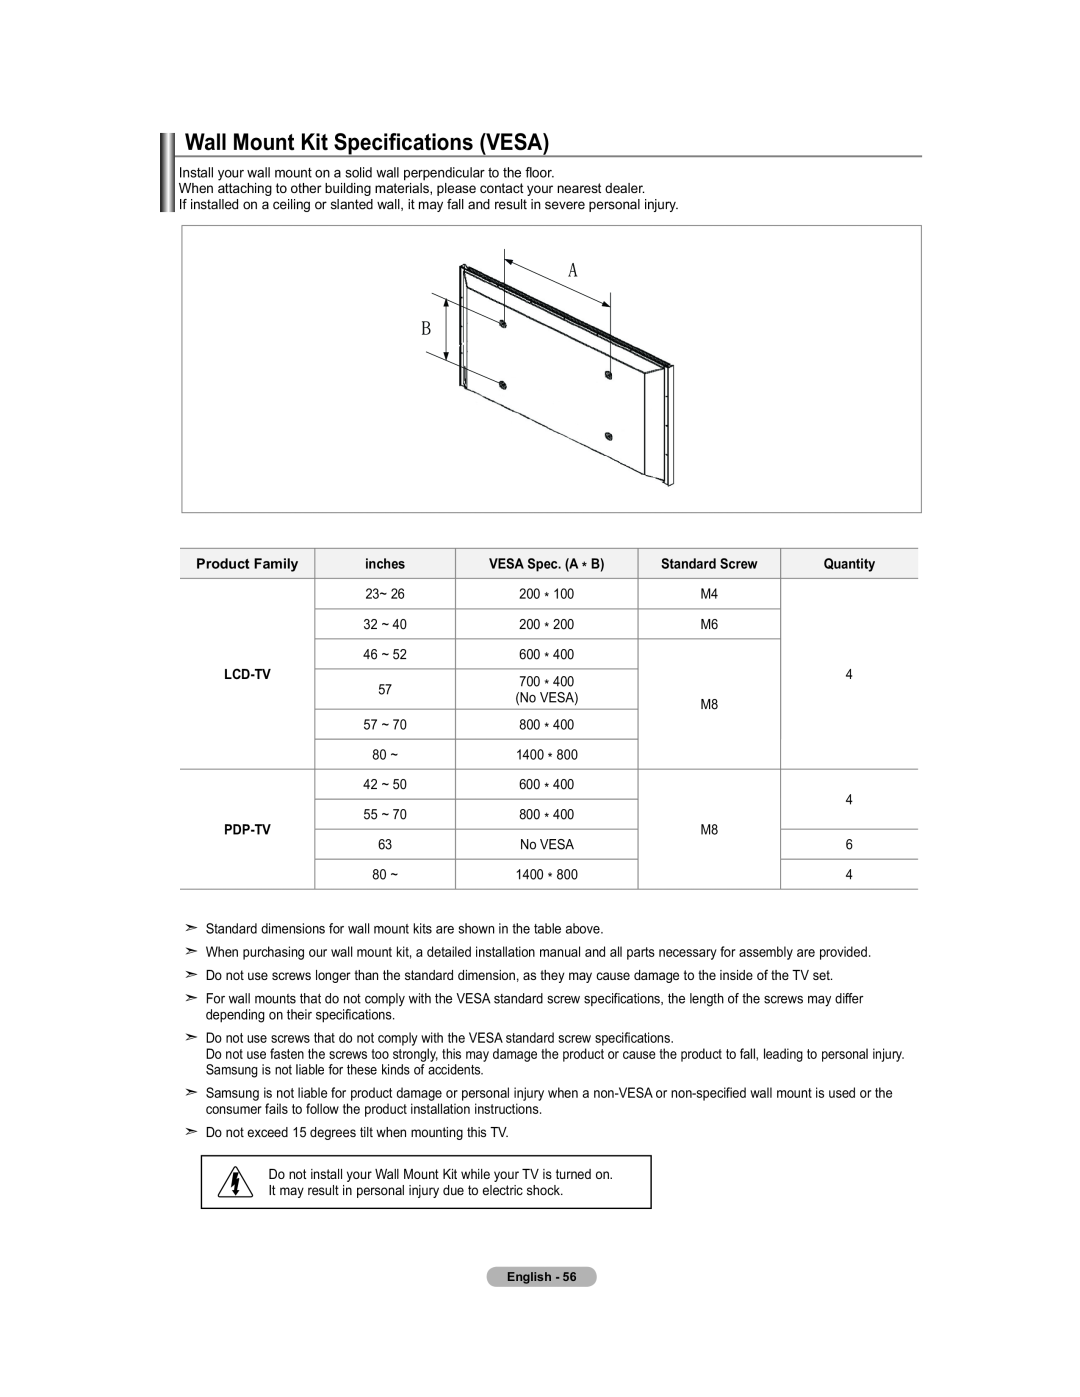 Samsung 451 user manual Product Family, inches, VESA Spec. A * B, Standard Screw, Quantity 